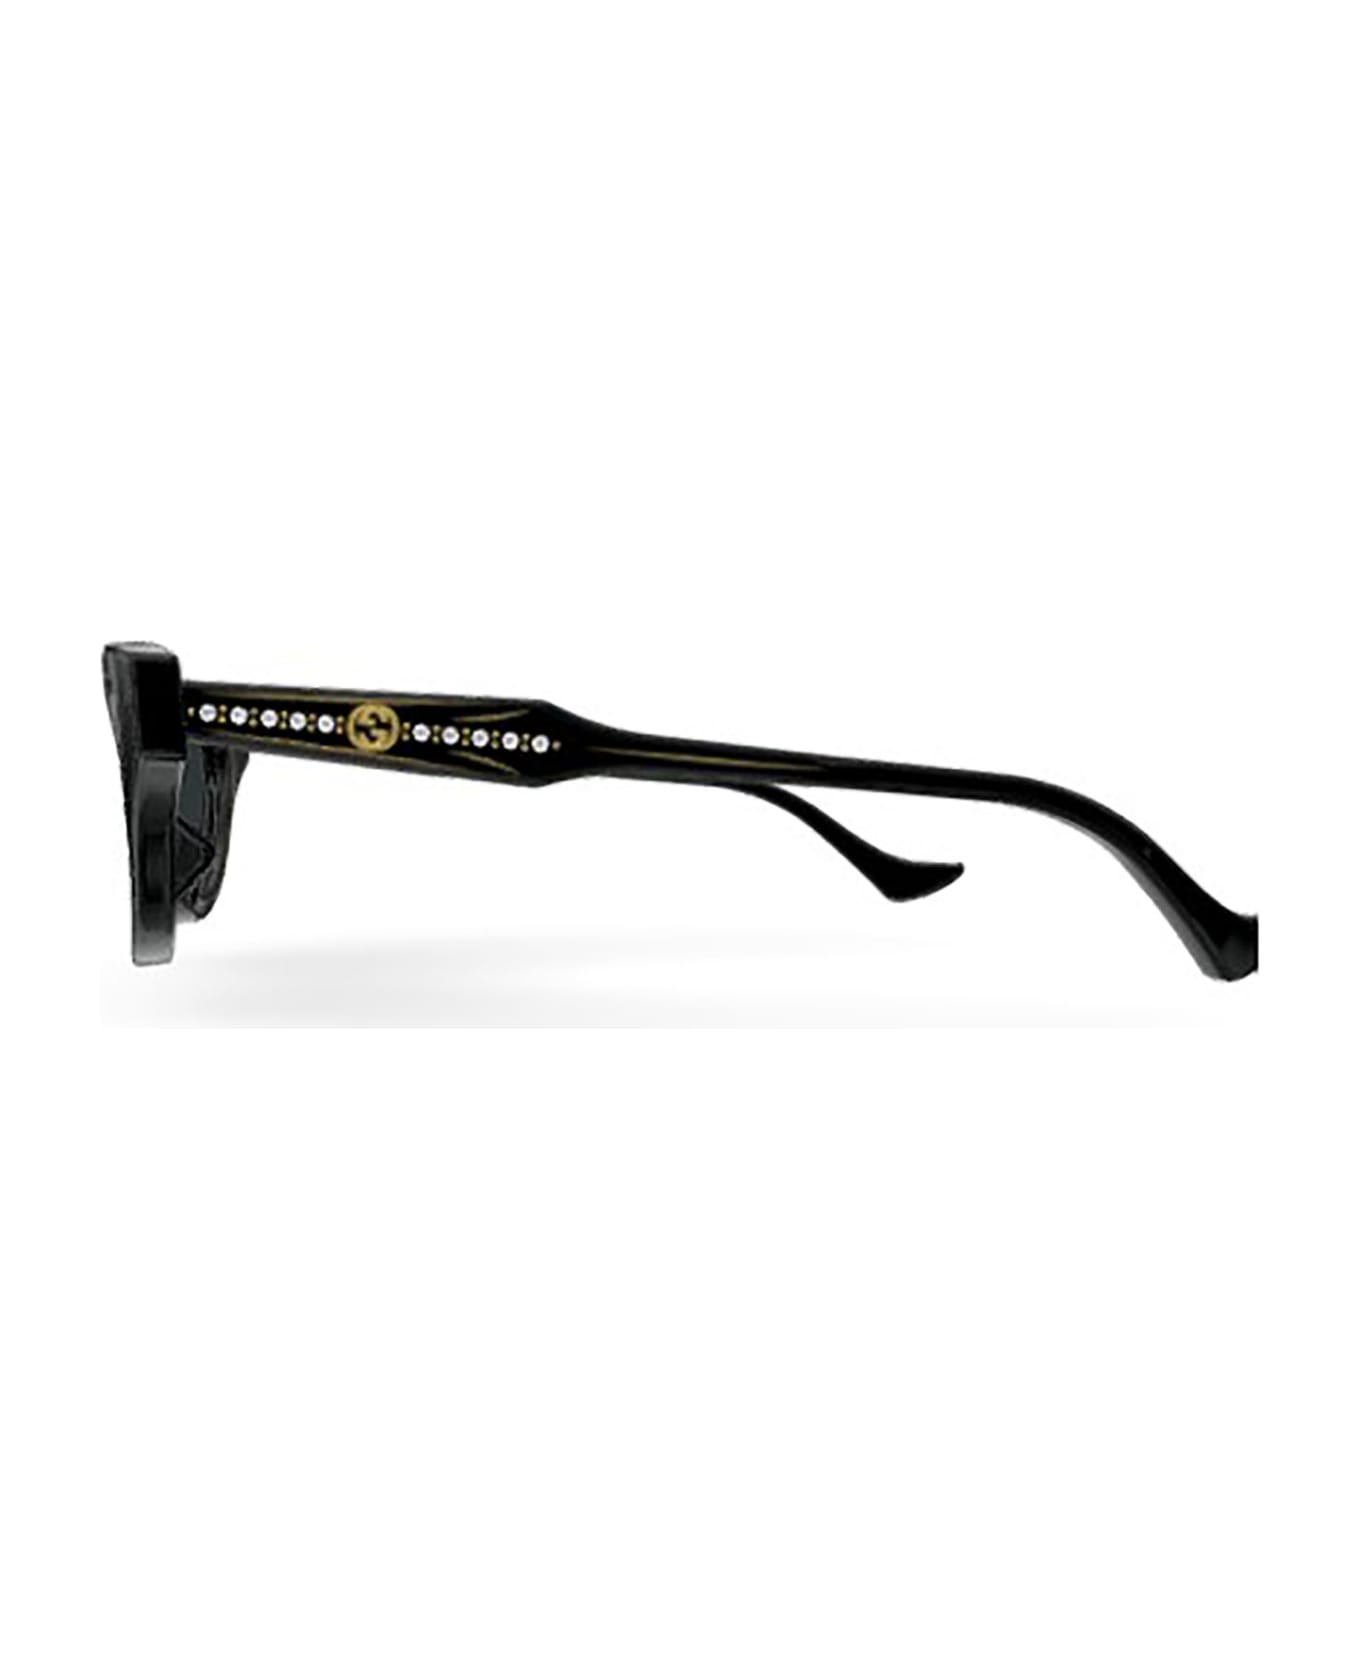 Gucci Eyewear GG1298S Sunglasses - Black Black Grey